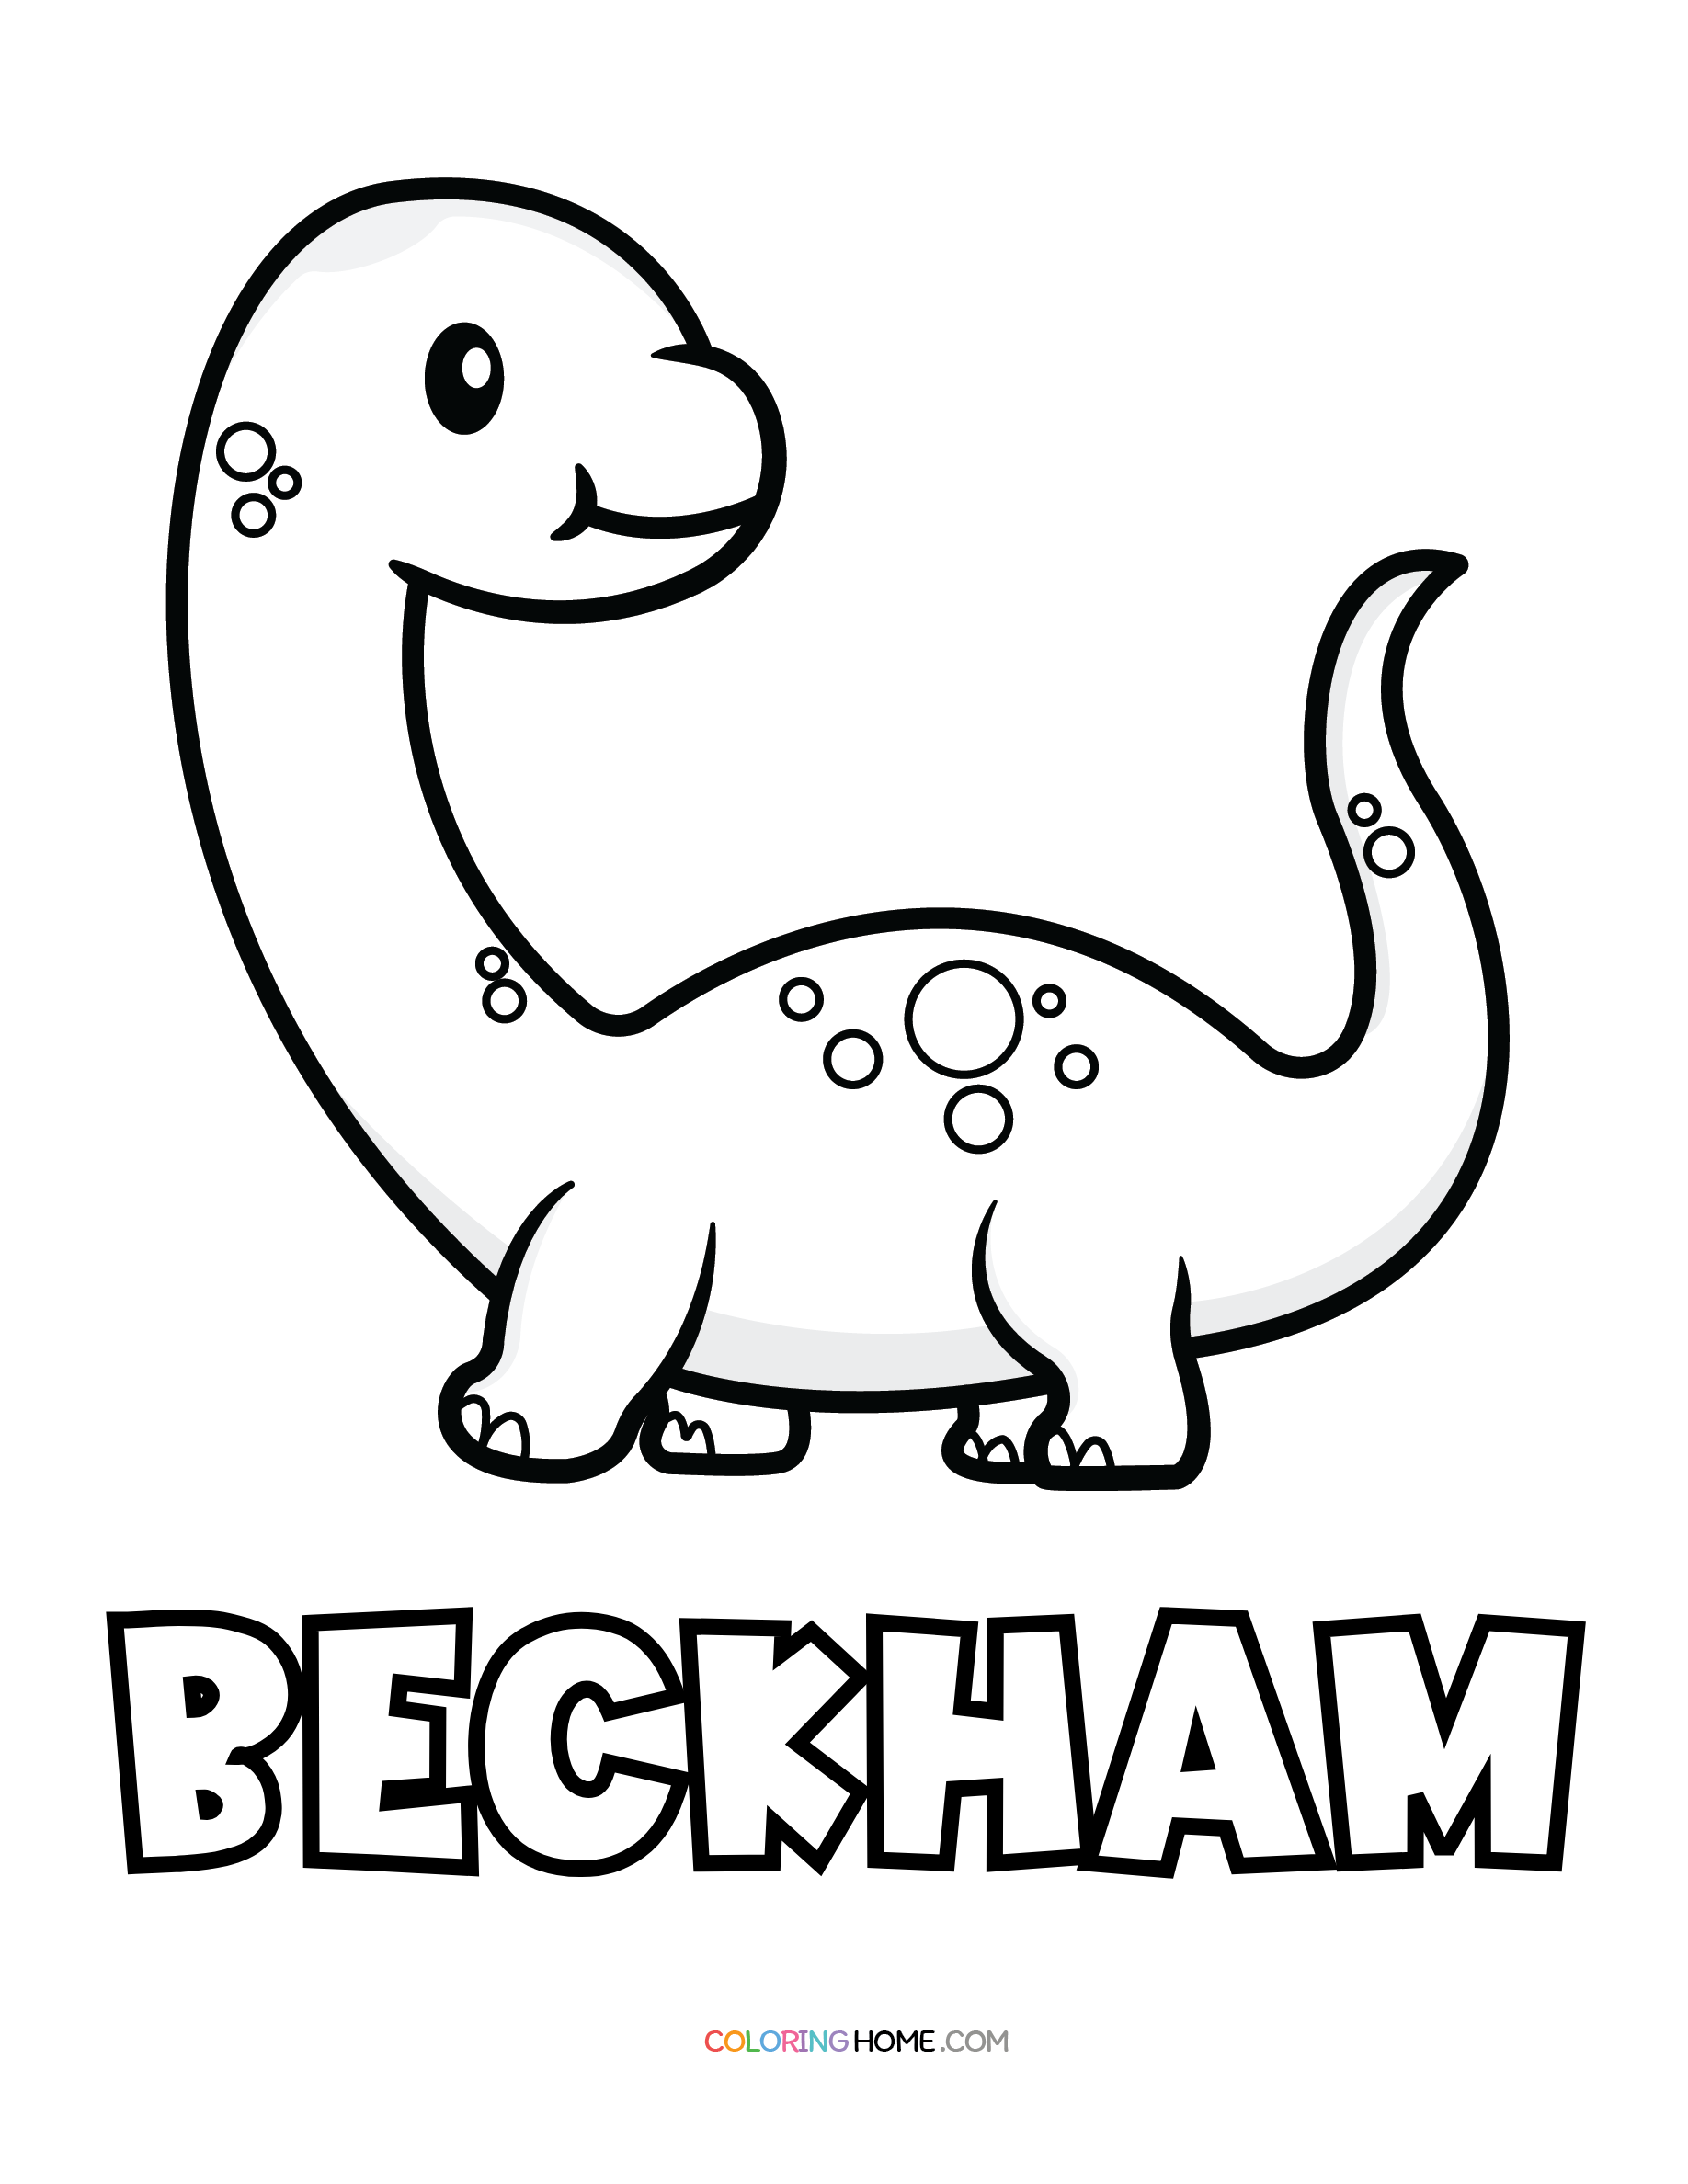 Beckham dinosaur coloring page